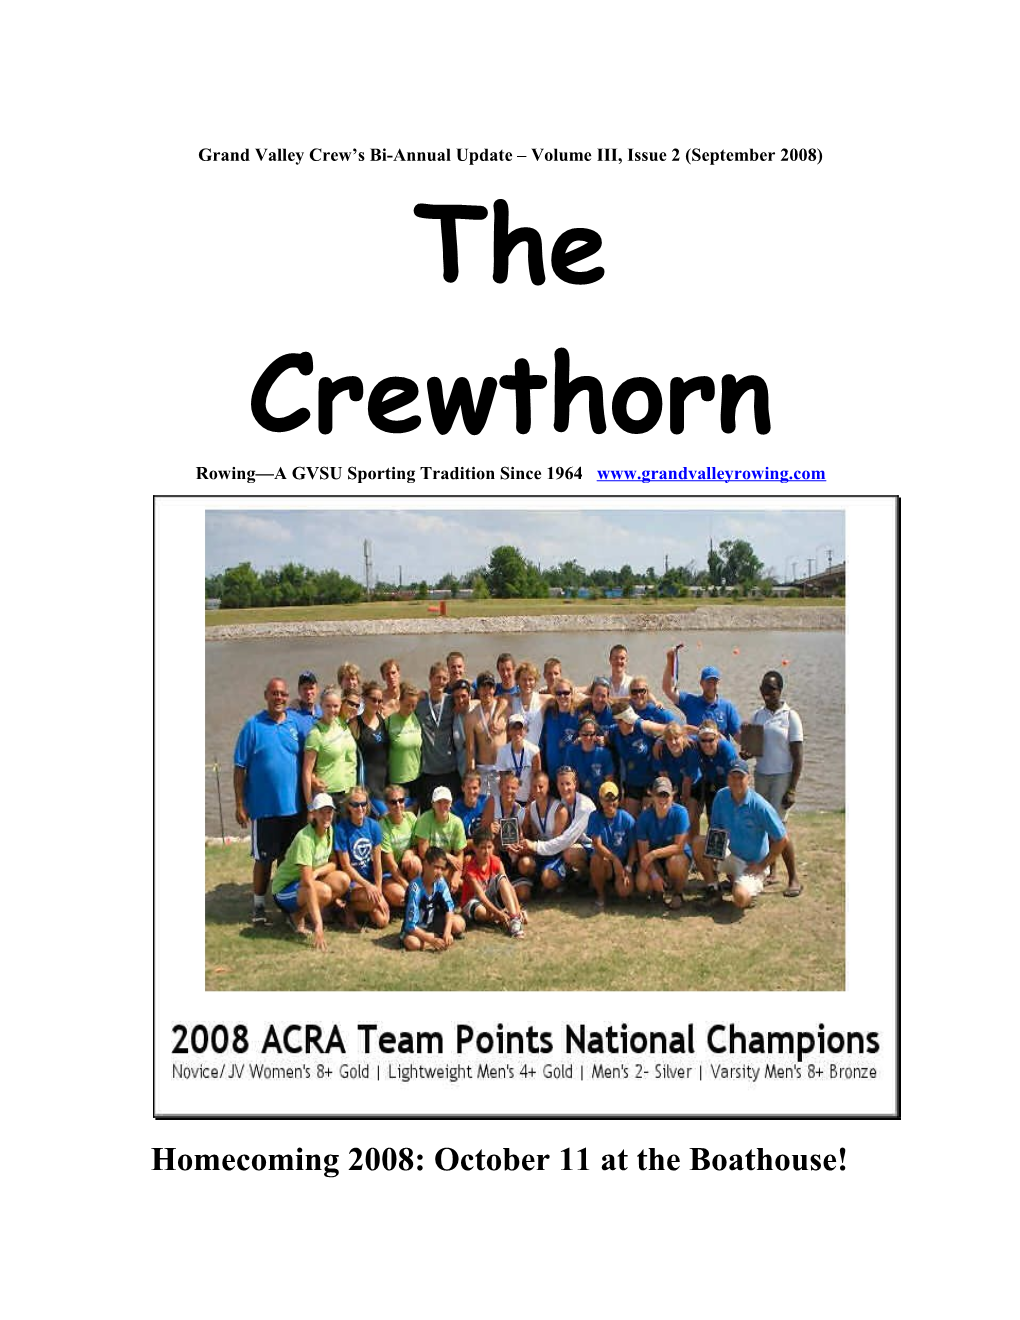 Grand Valley Crew S Bi-Annual Update Volume I, Issue 1 (February 2006)